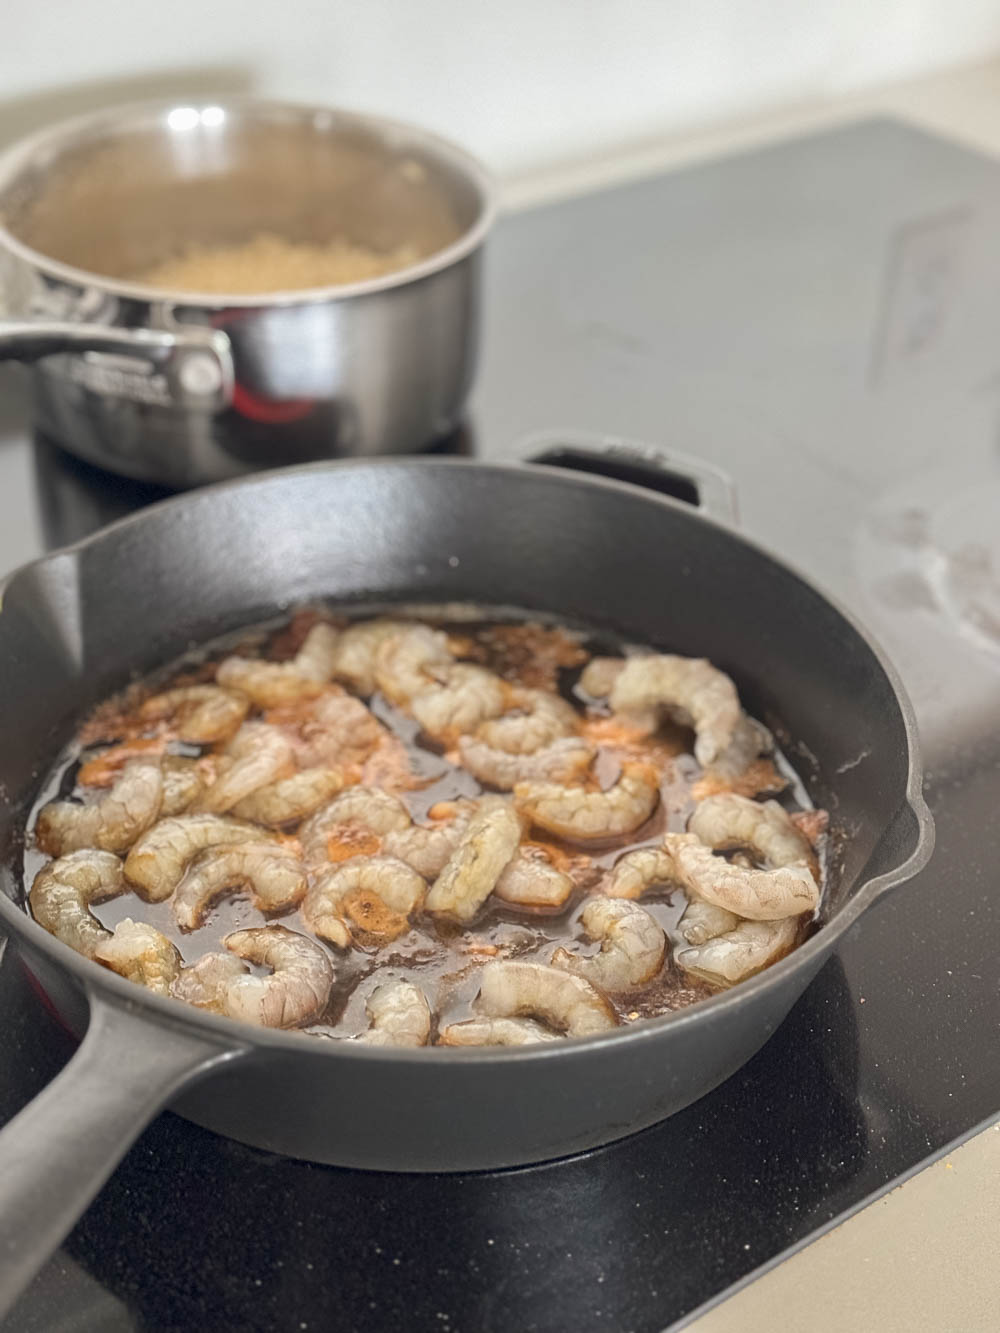 Shrimp cooking in an shrimp stir fry marinade